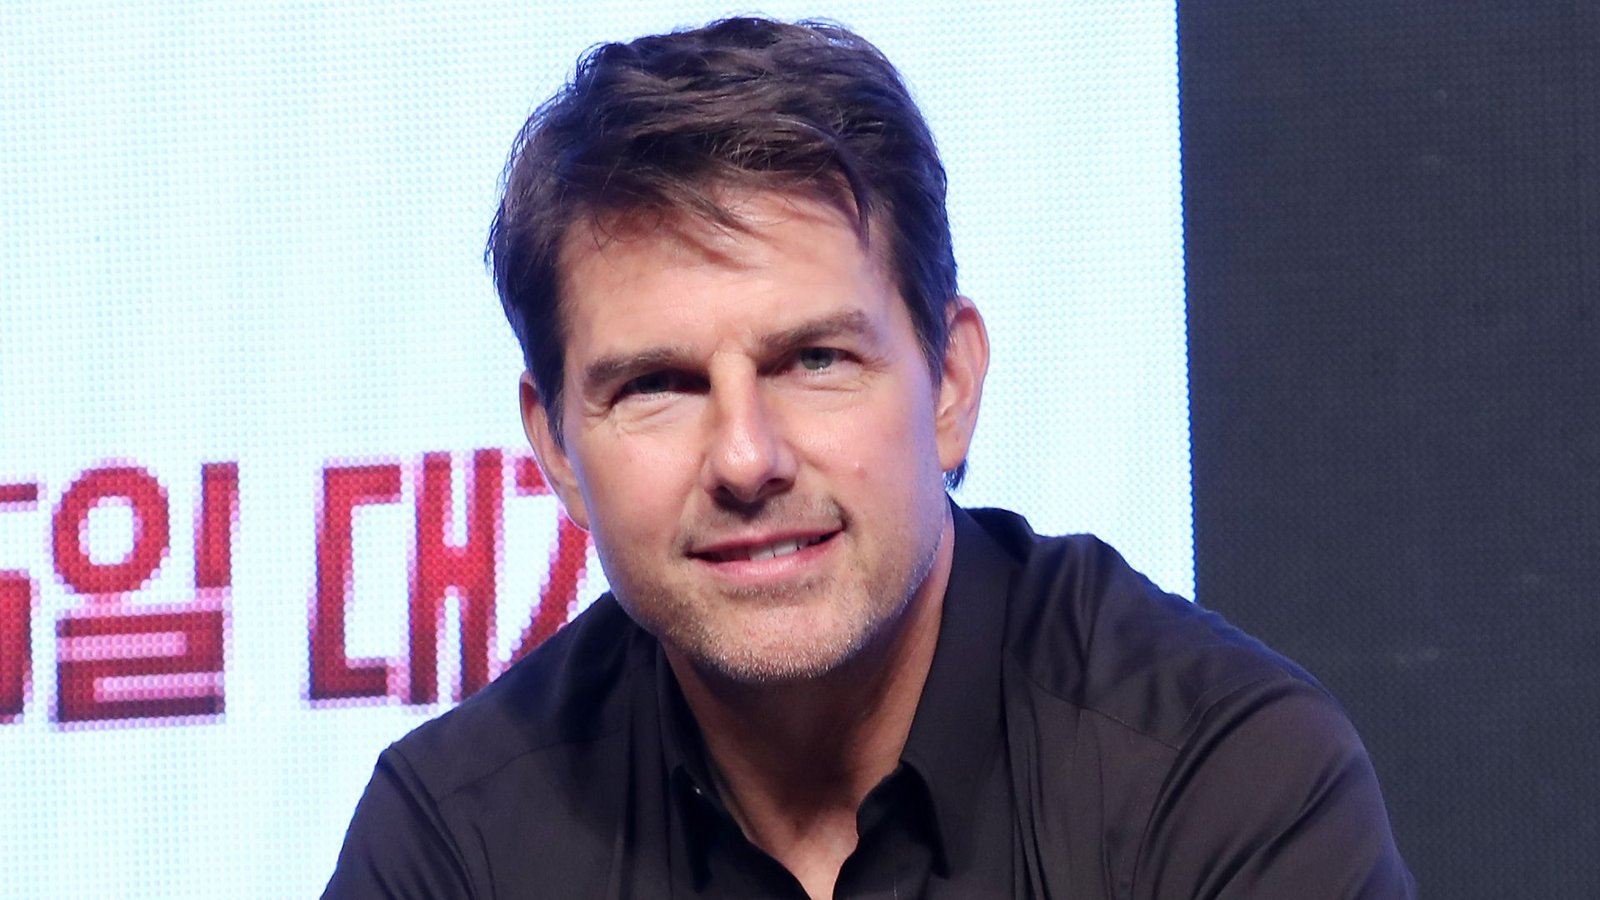 Tom Cruise nimmt an der Premiere des Films "Mission: Impossible - Fallout" teil.Foto: ---/YNA/dpa